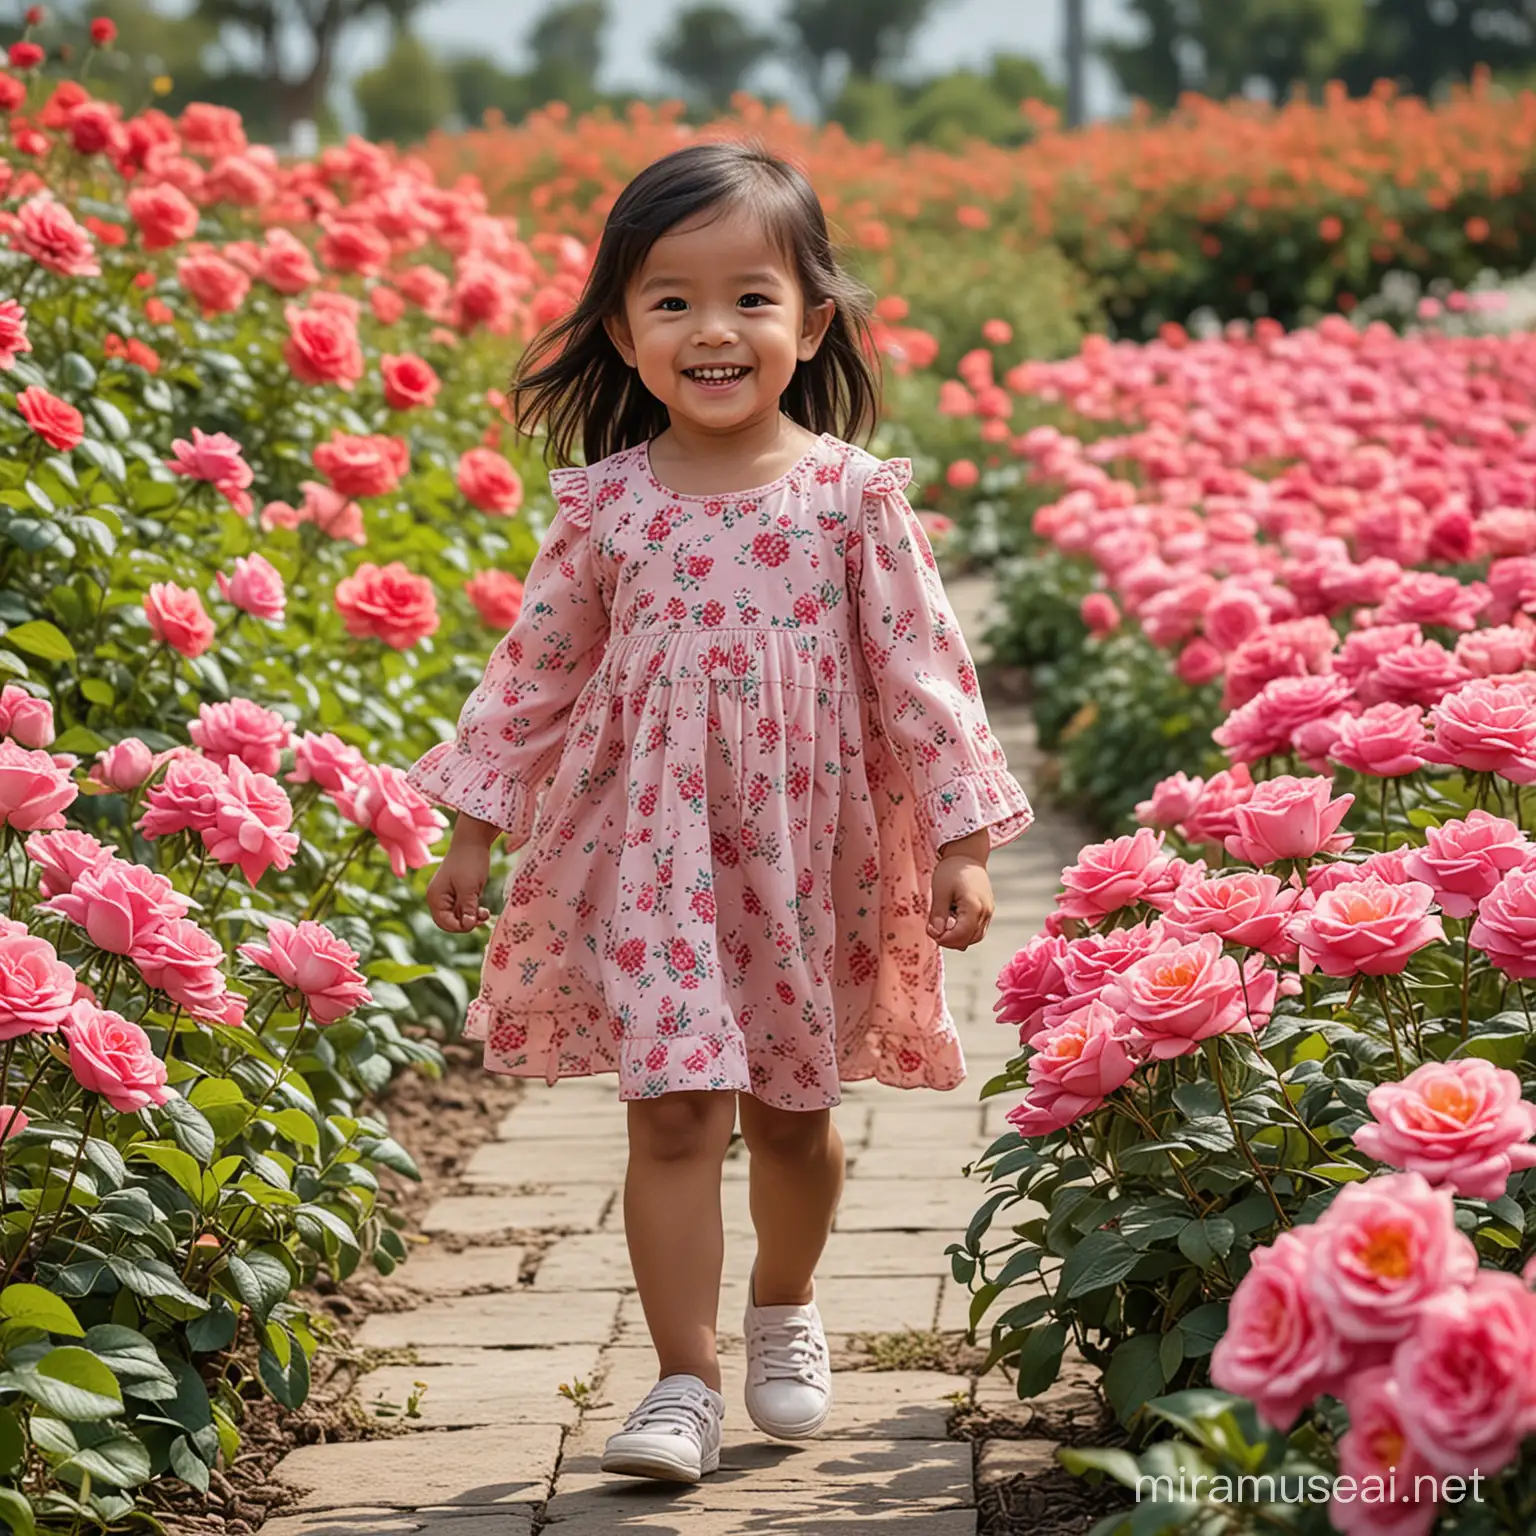 Joyful 4YearOld Indonesian Girl Carrying Baby Sister in Colorful Rose Garden